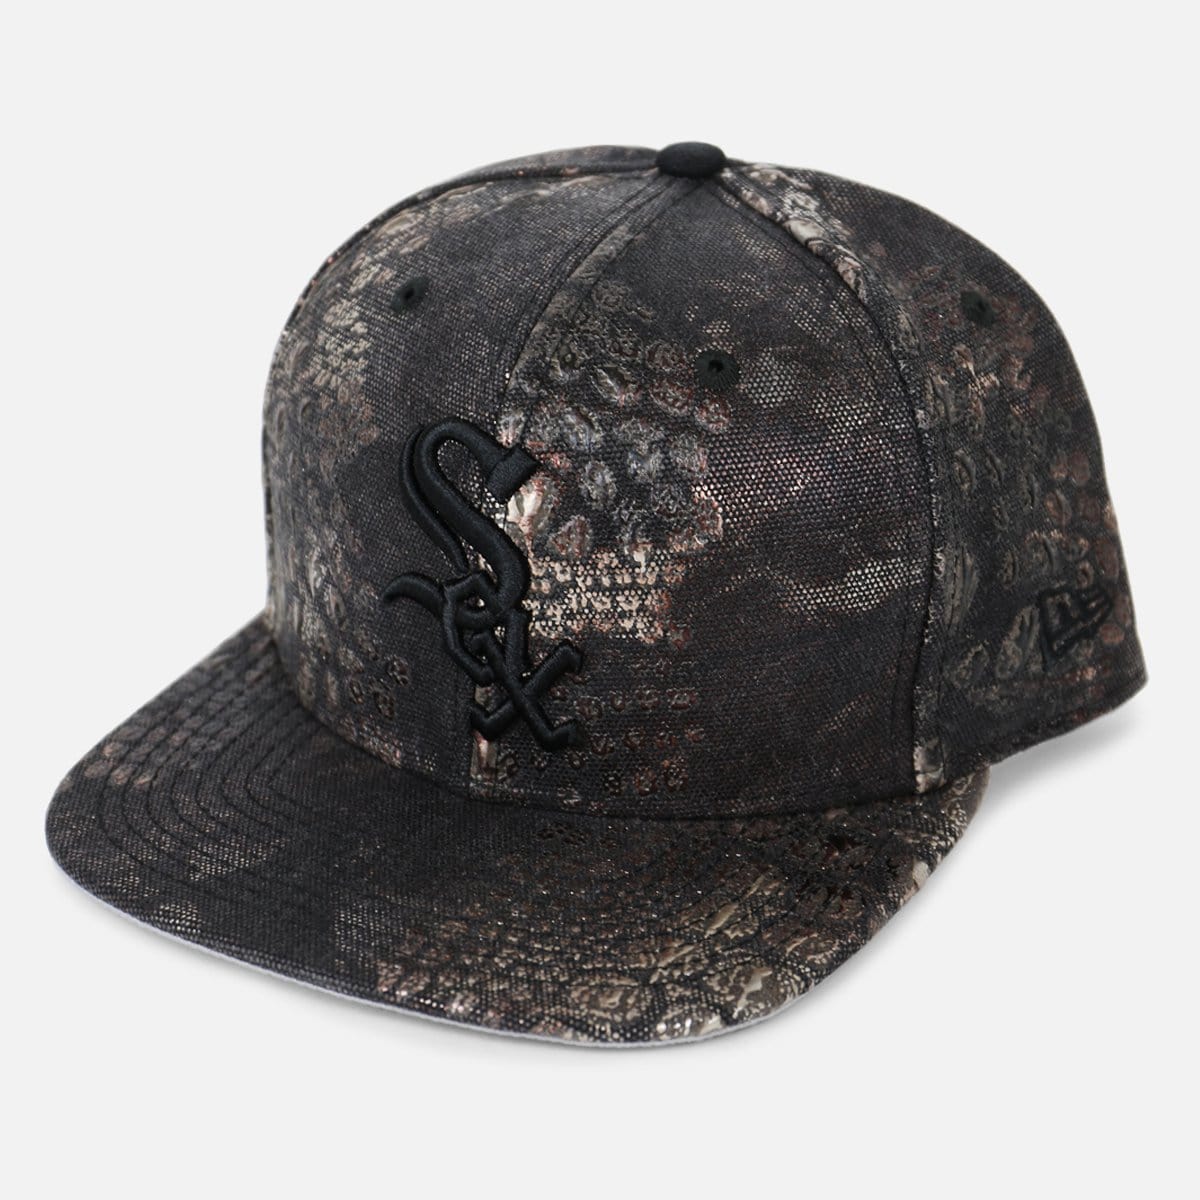 New Era Chicago White Sox Solid Croc Canvas Snapback Hat (Black/Bronze-Copper)